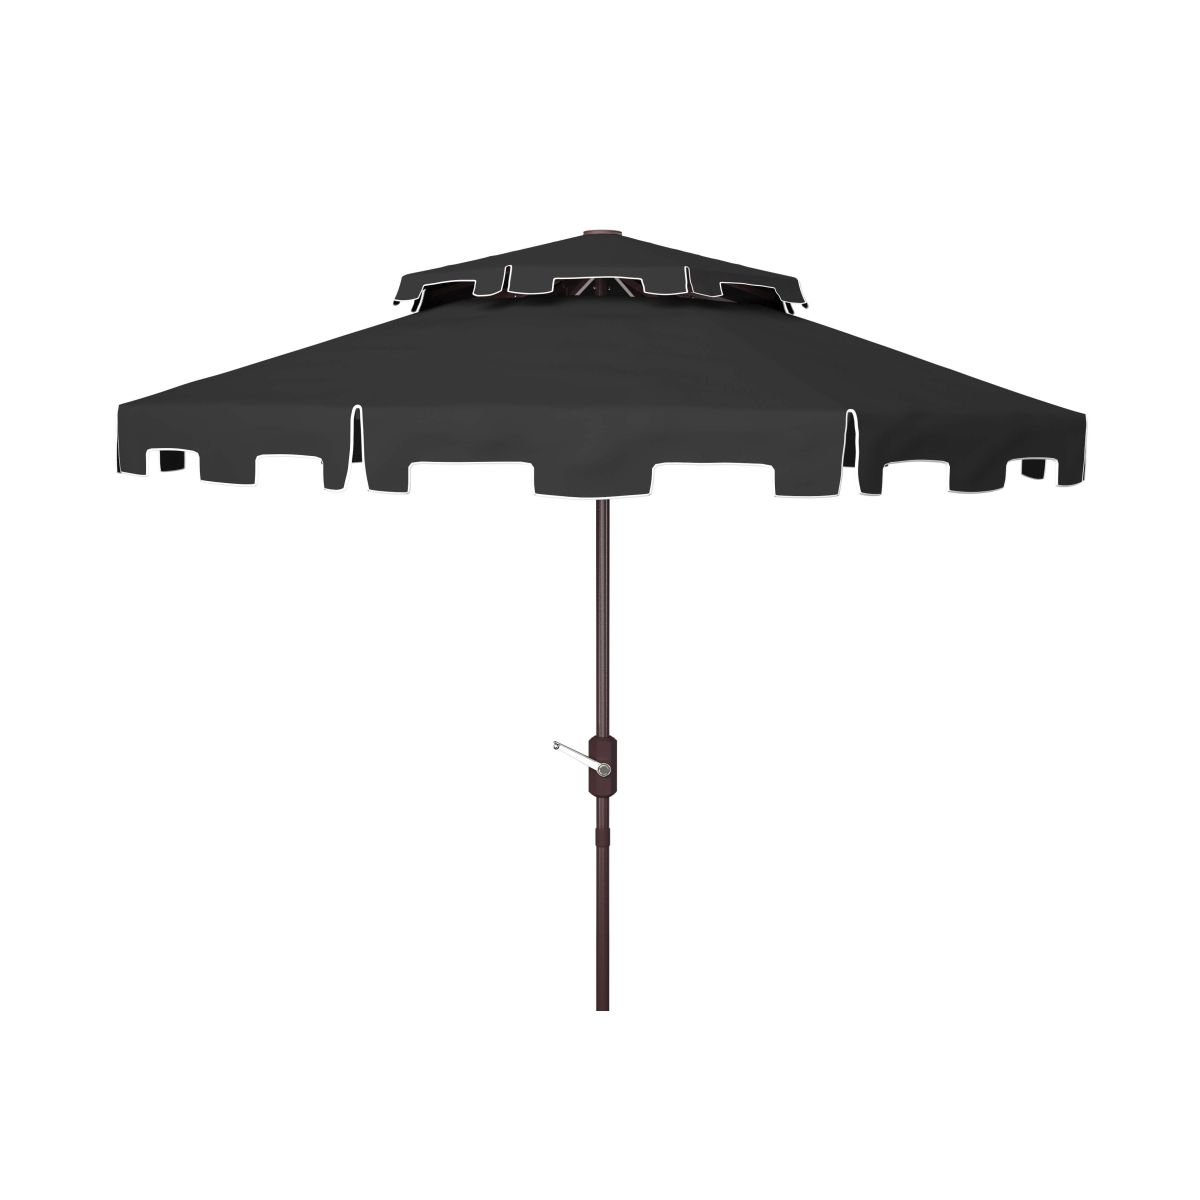 Safavieh Zimmerman 9ft Double Top Market Umbrella , PAT8200 - Black/White Trim